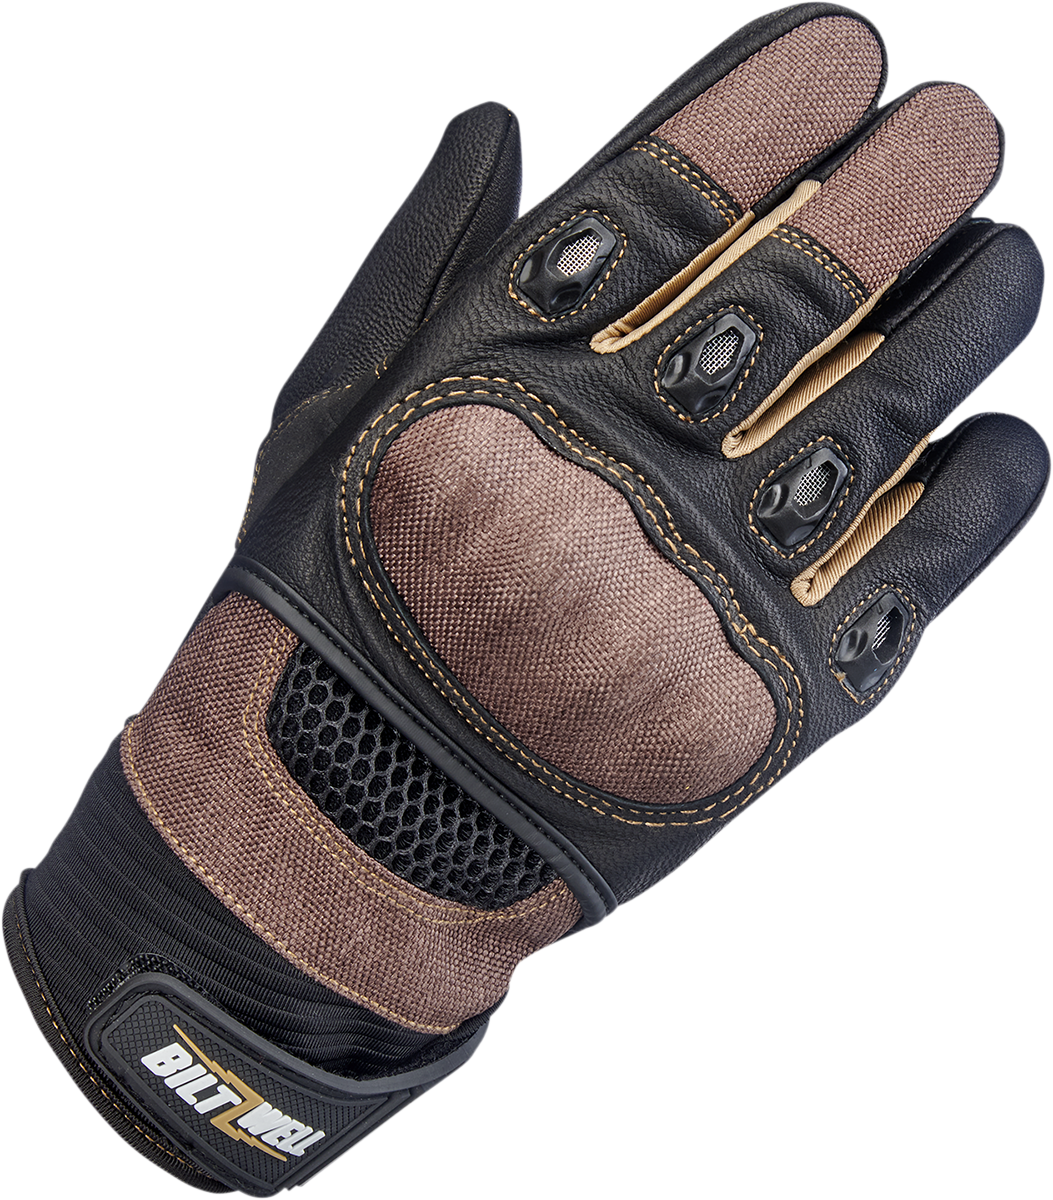 BILTWELL Bridgeport Gloves - Chocolate - Medium 1509-0201-303